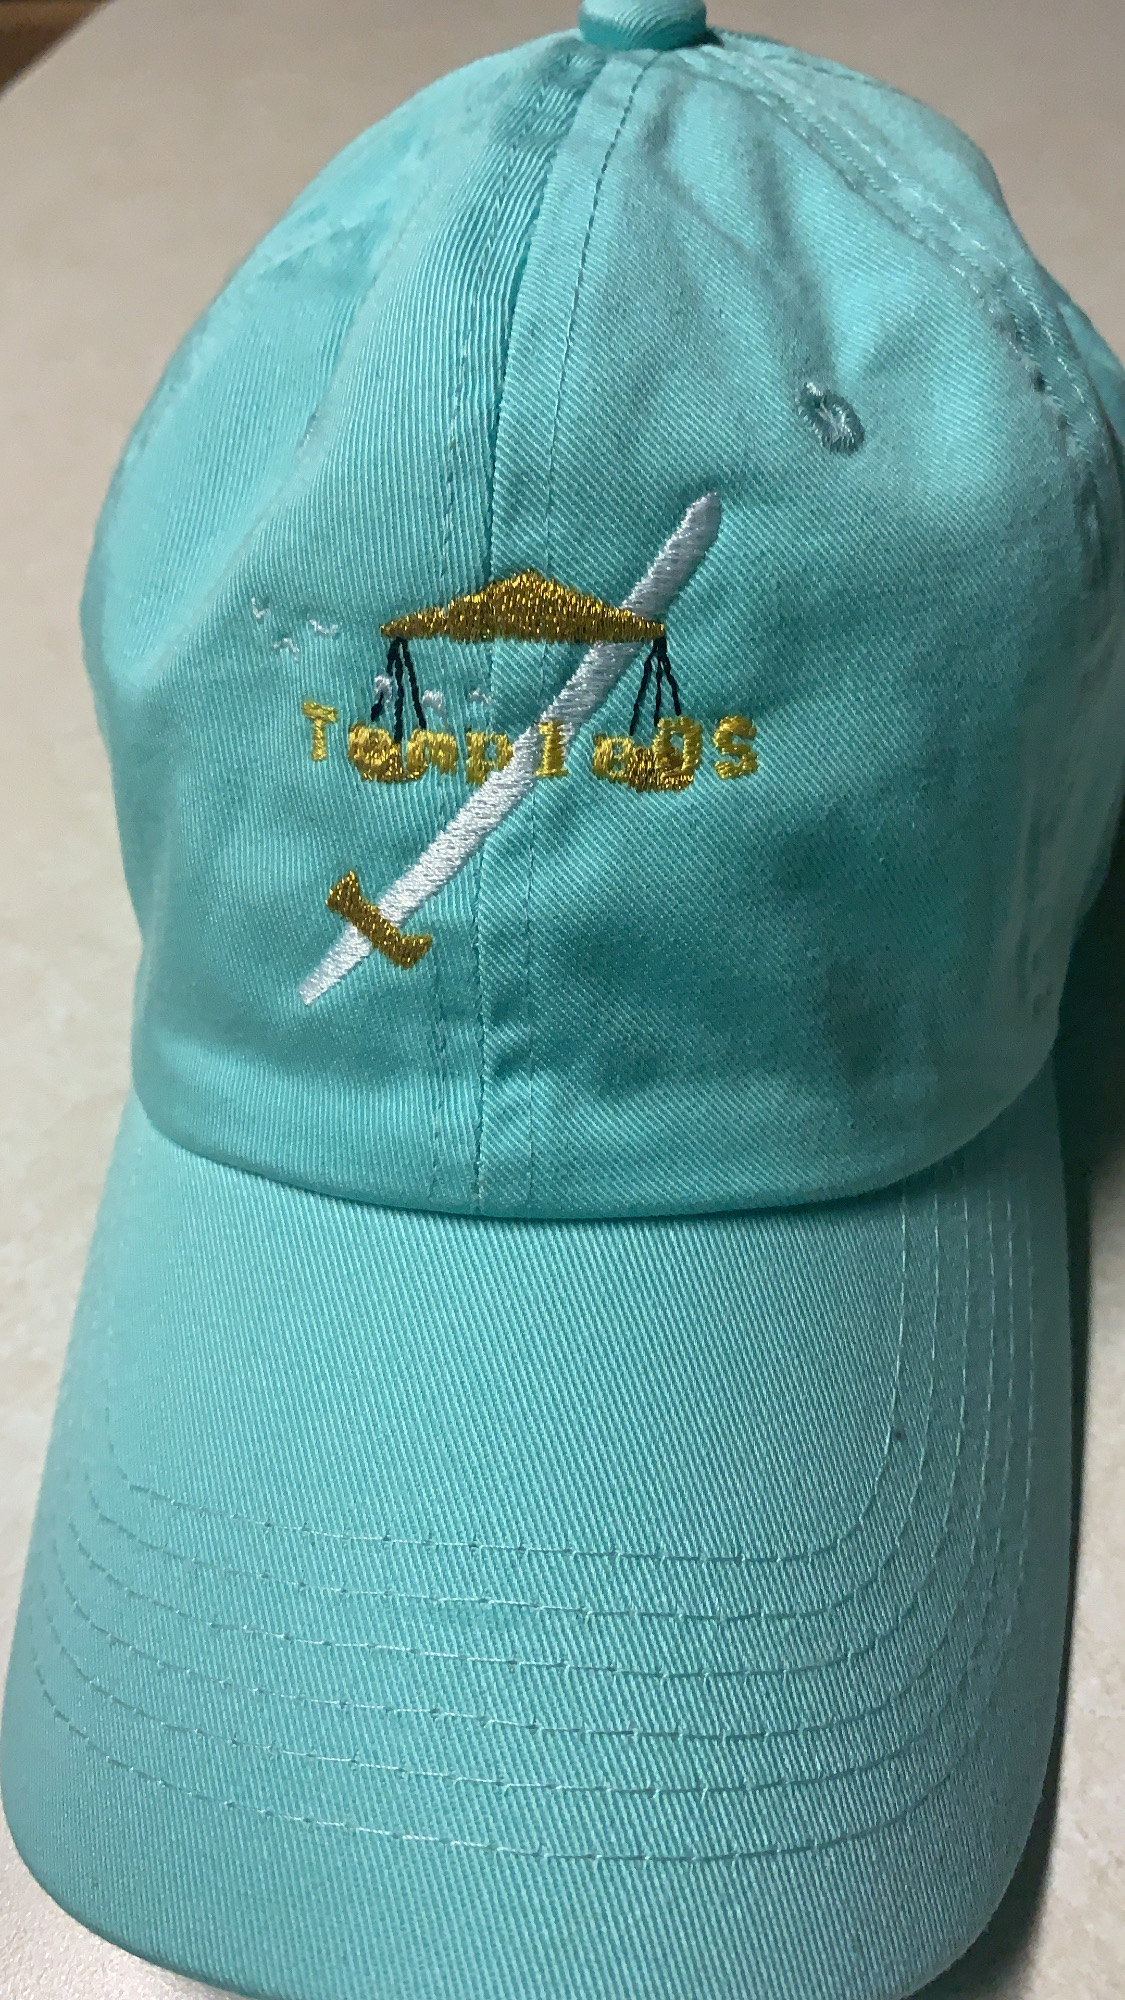 TempleOS OG hat, embroidered apparel, custom hats